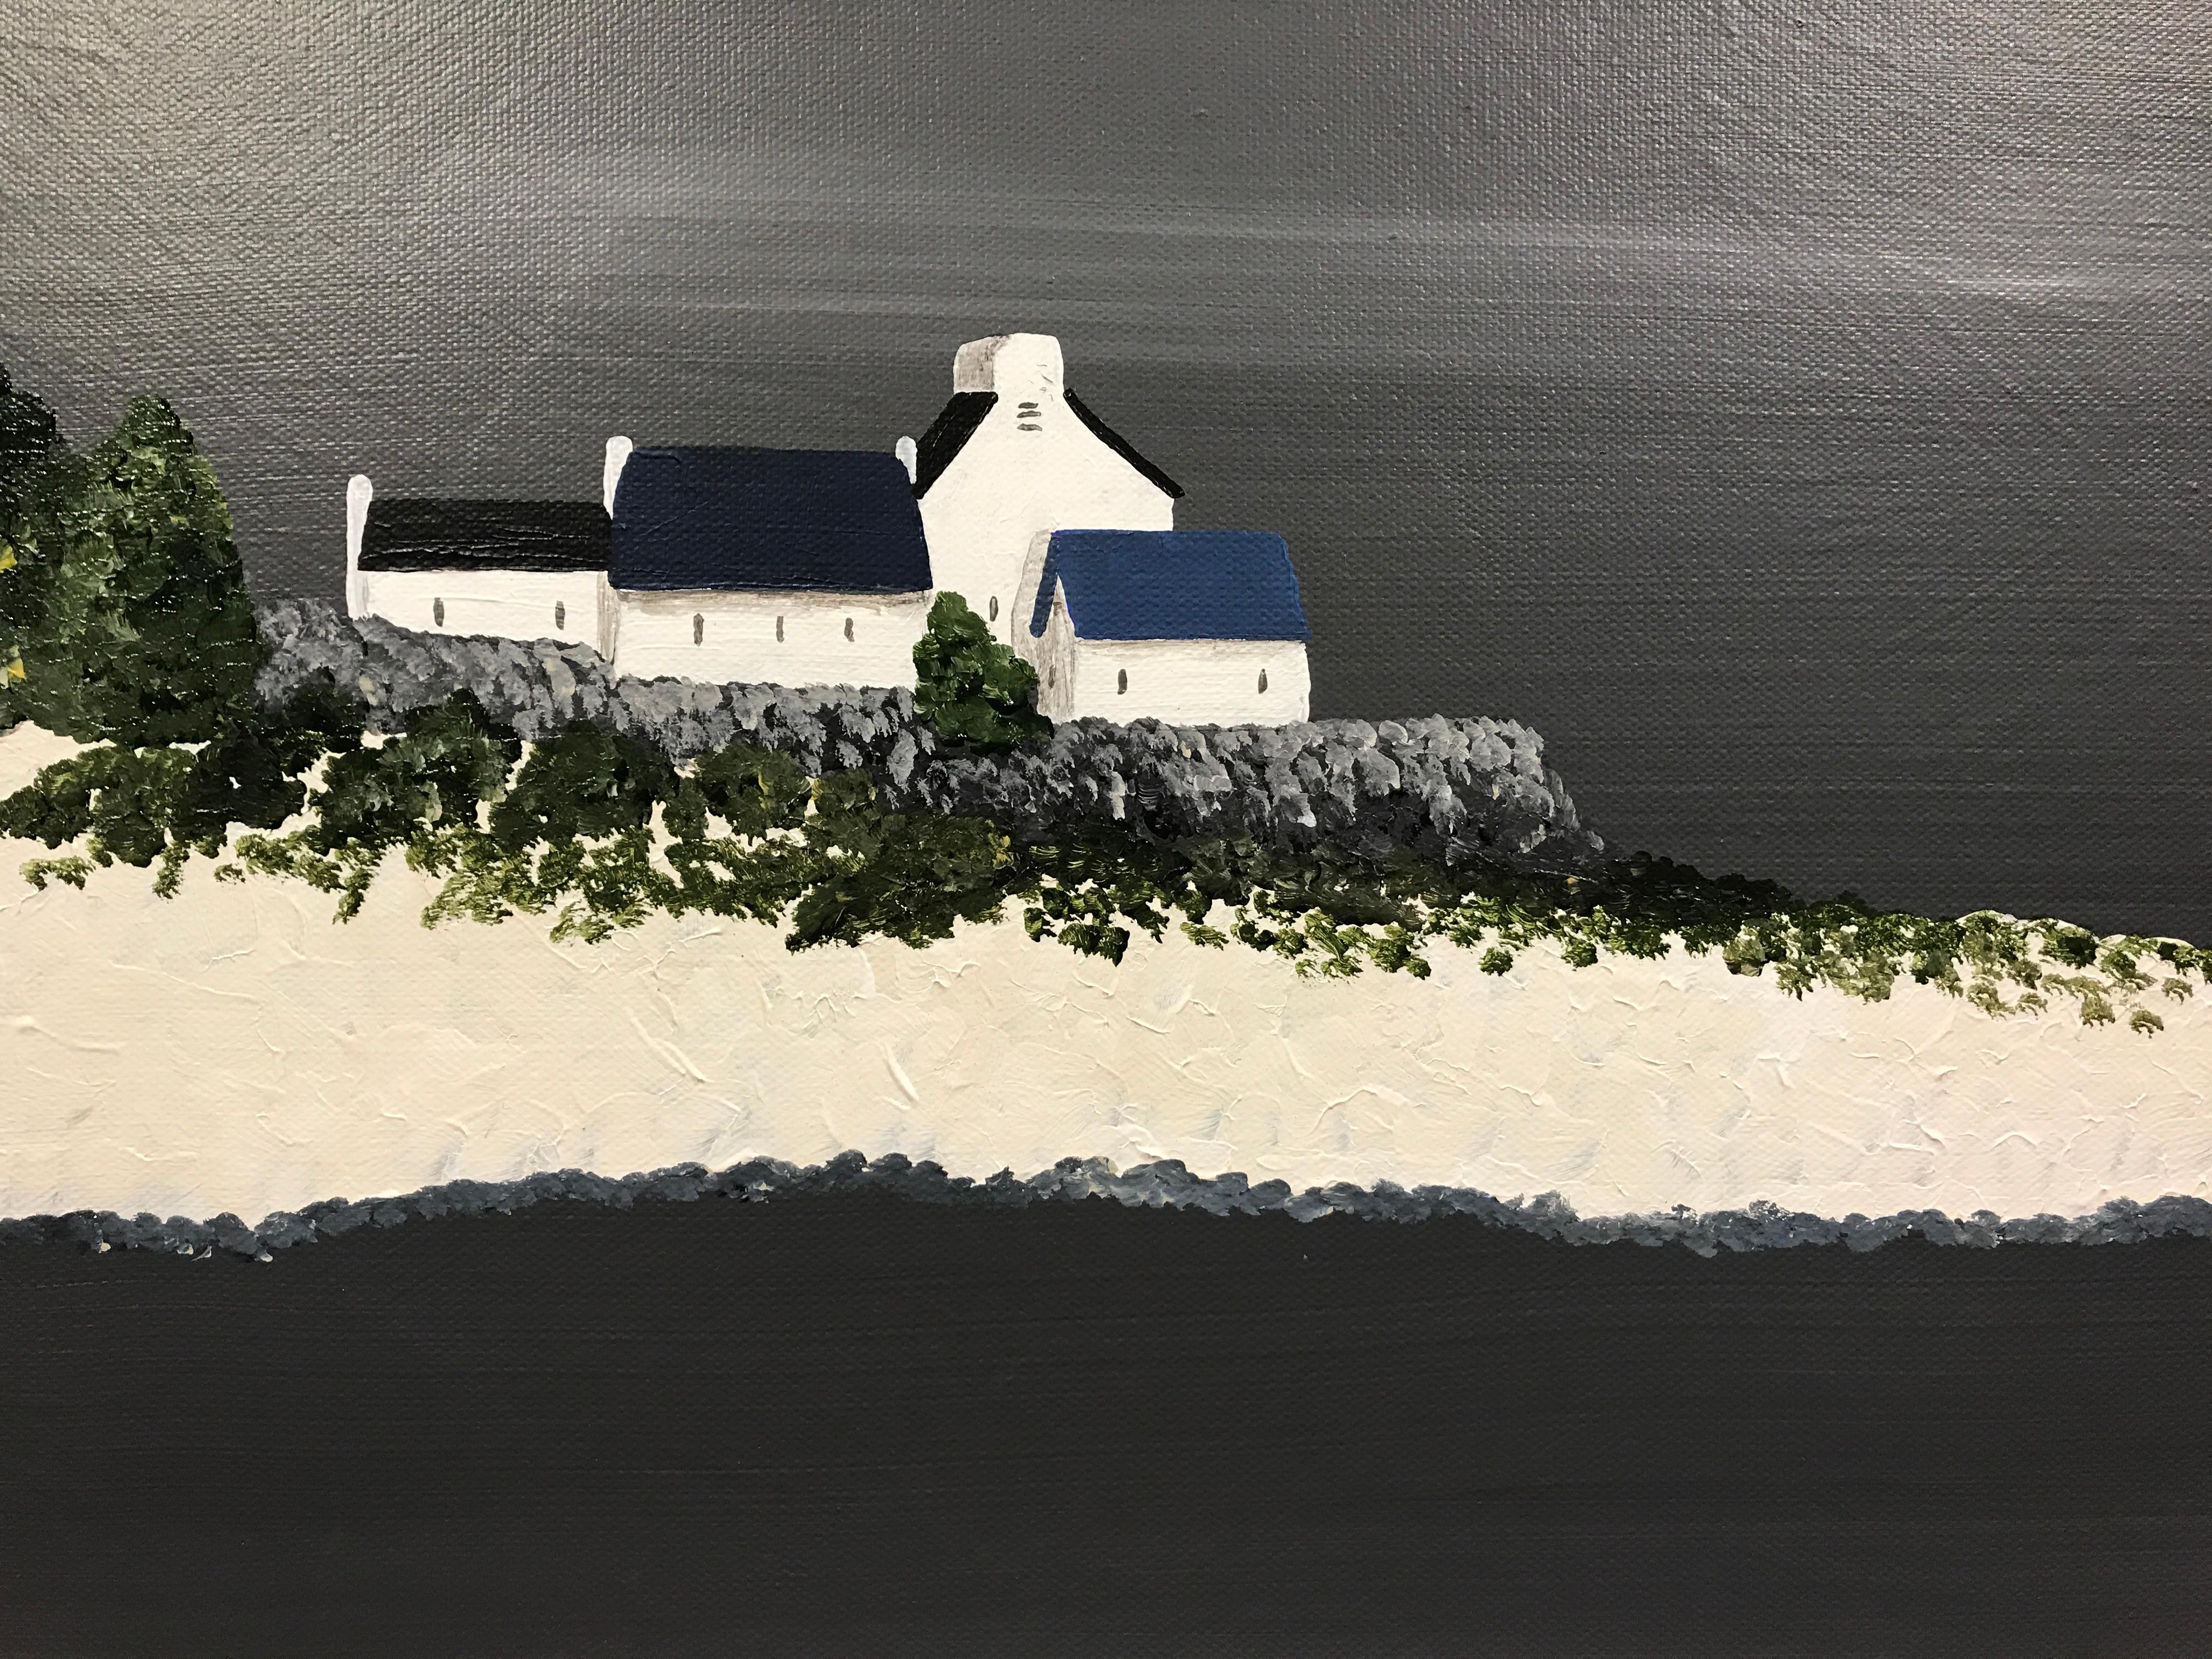 Pleasing Light, Susan Kinsella 2018 Contemporary Square Coastal Painting 4